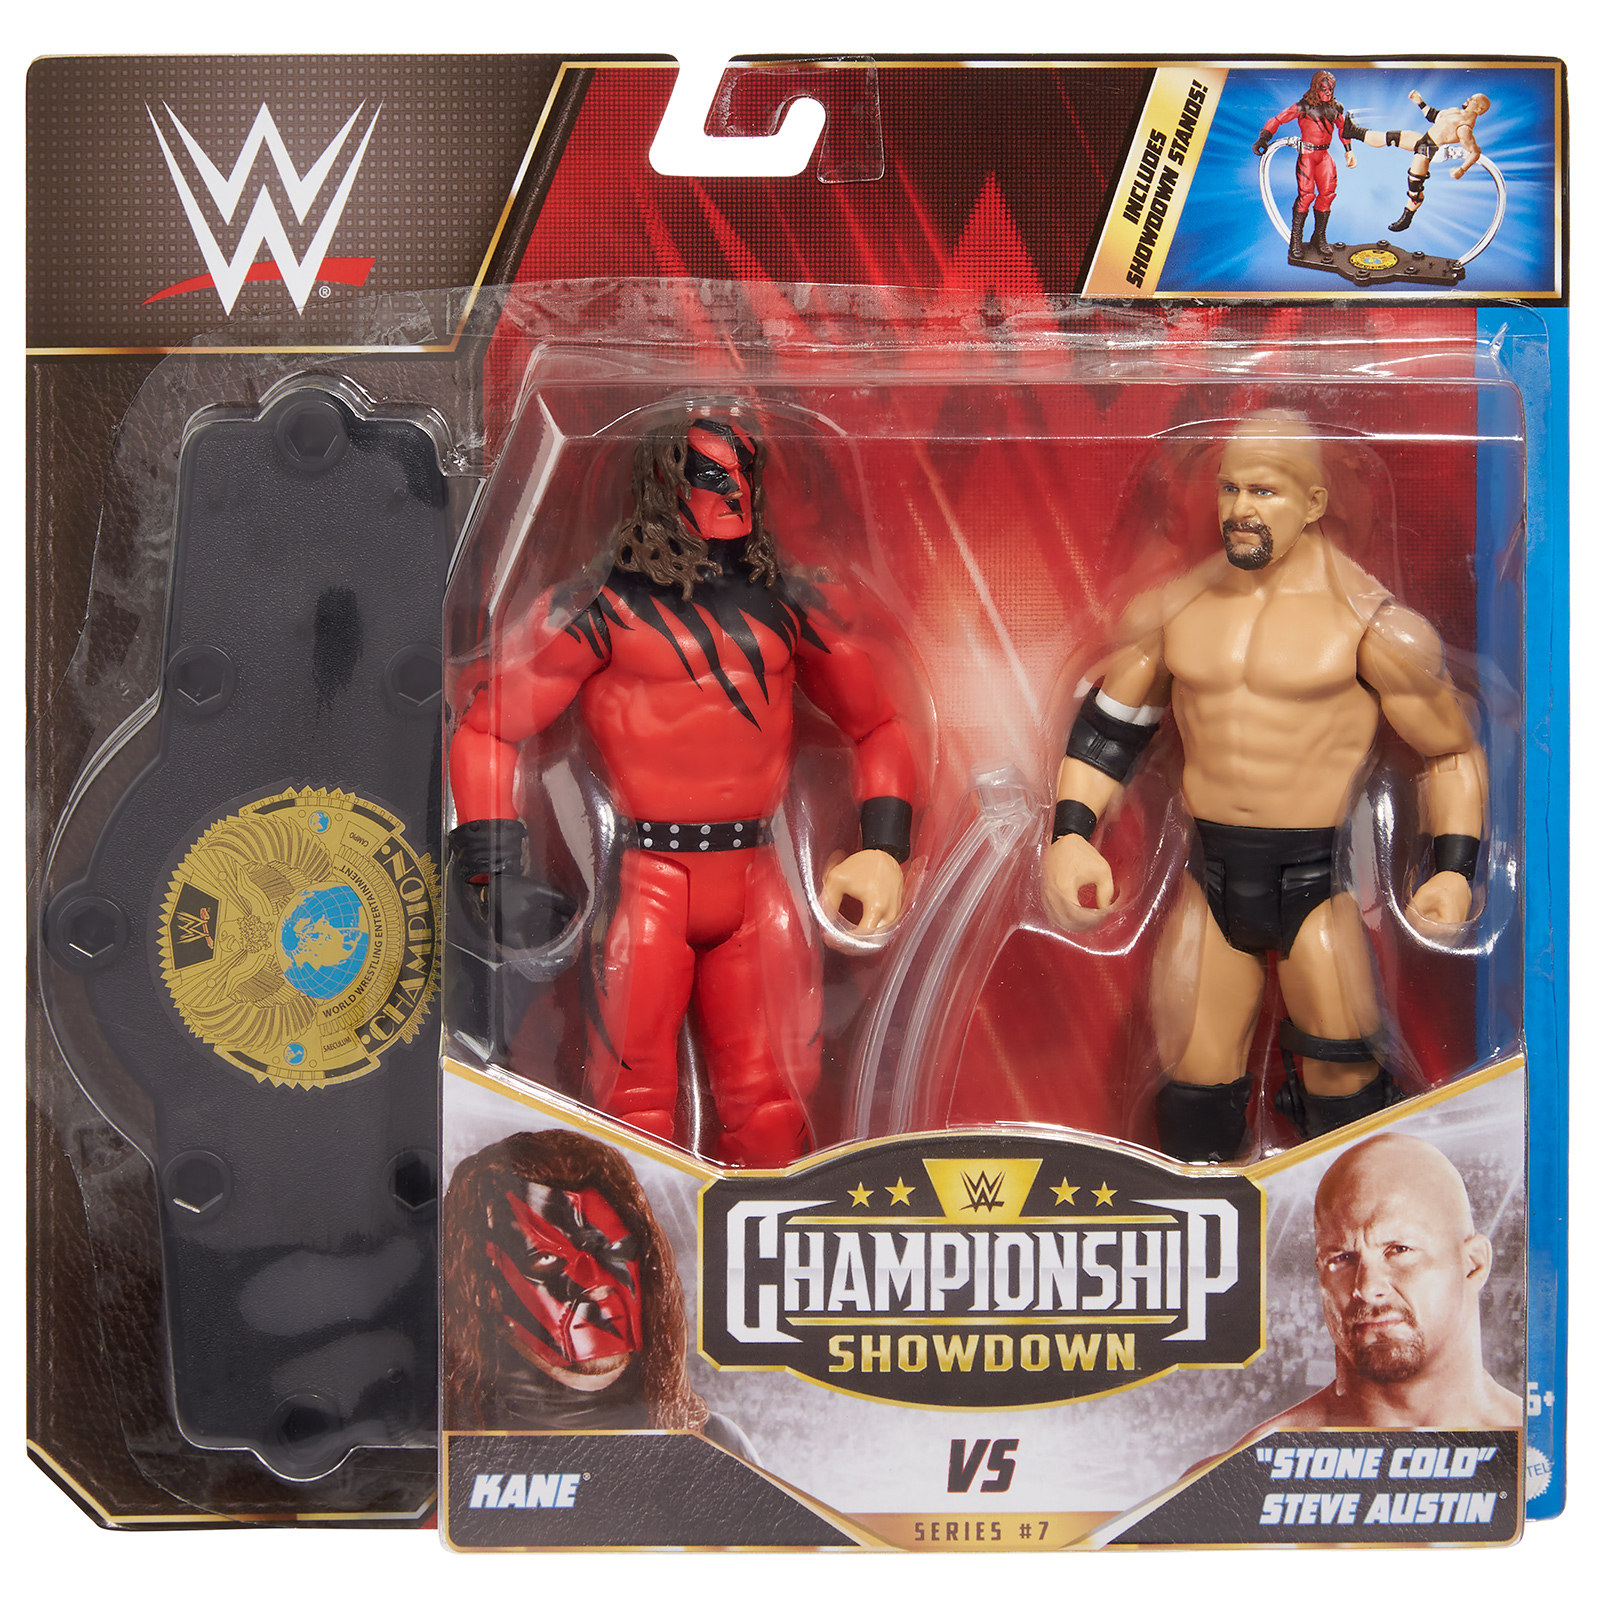 Wwe Championship Showdown Series 7 Steve Austin And Kane Figure 2 Pack Toyfigz Com